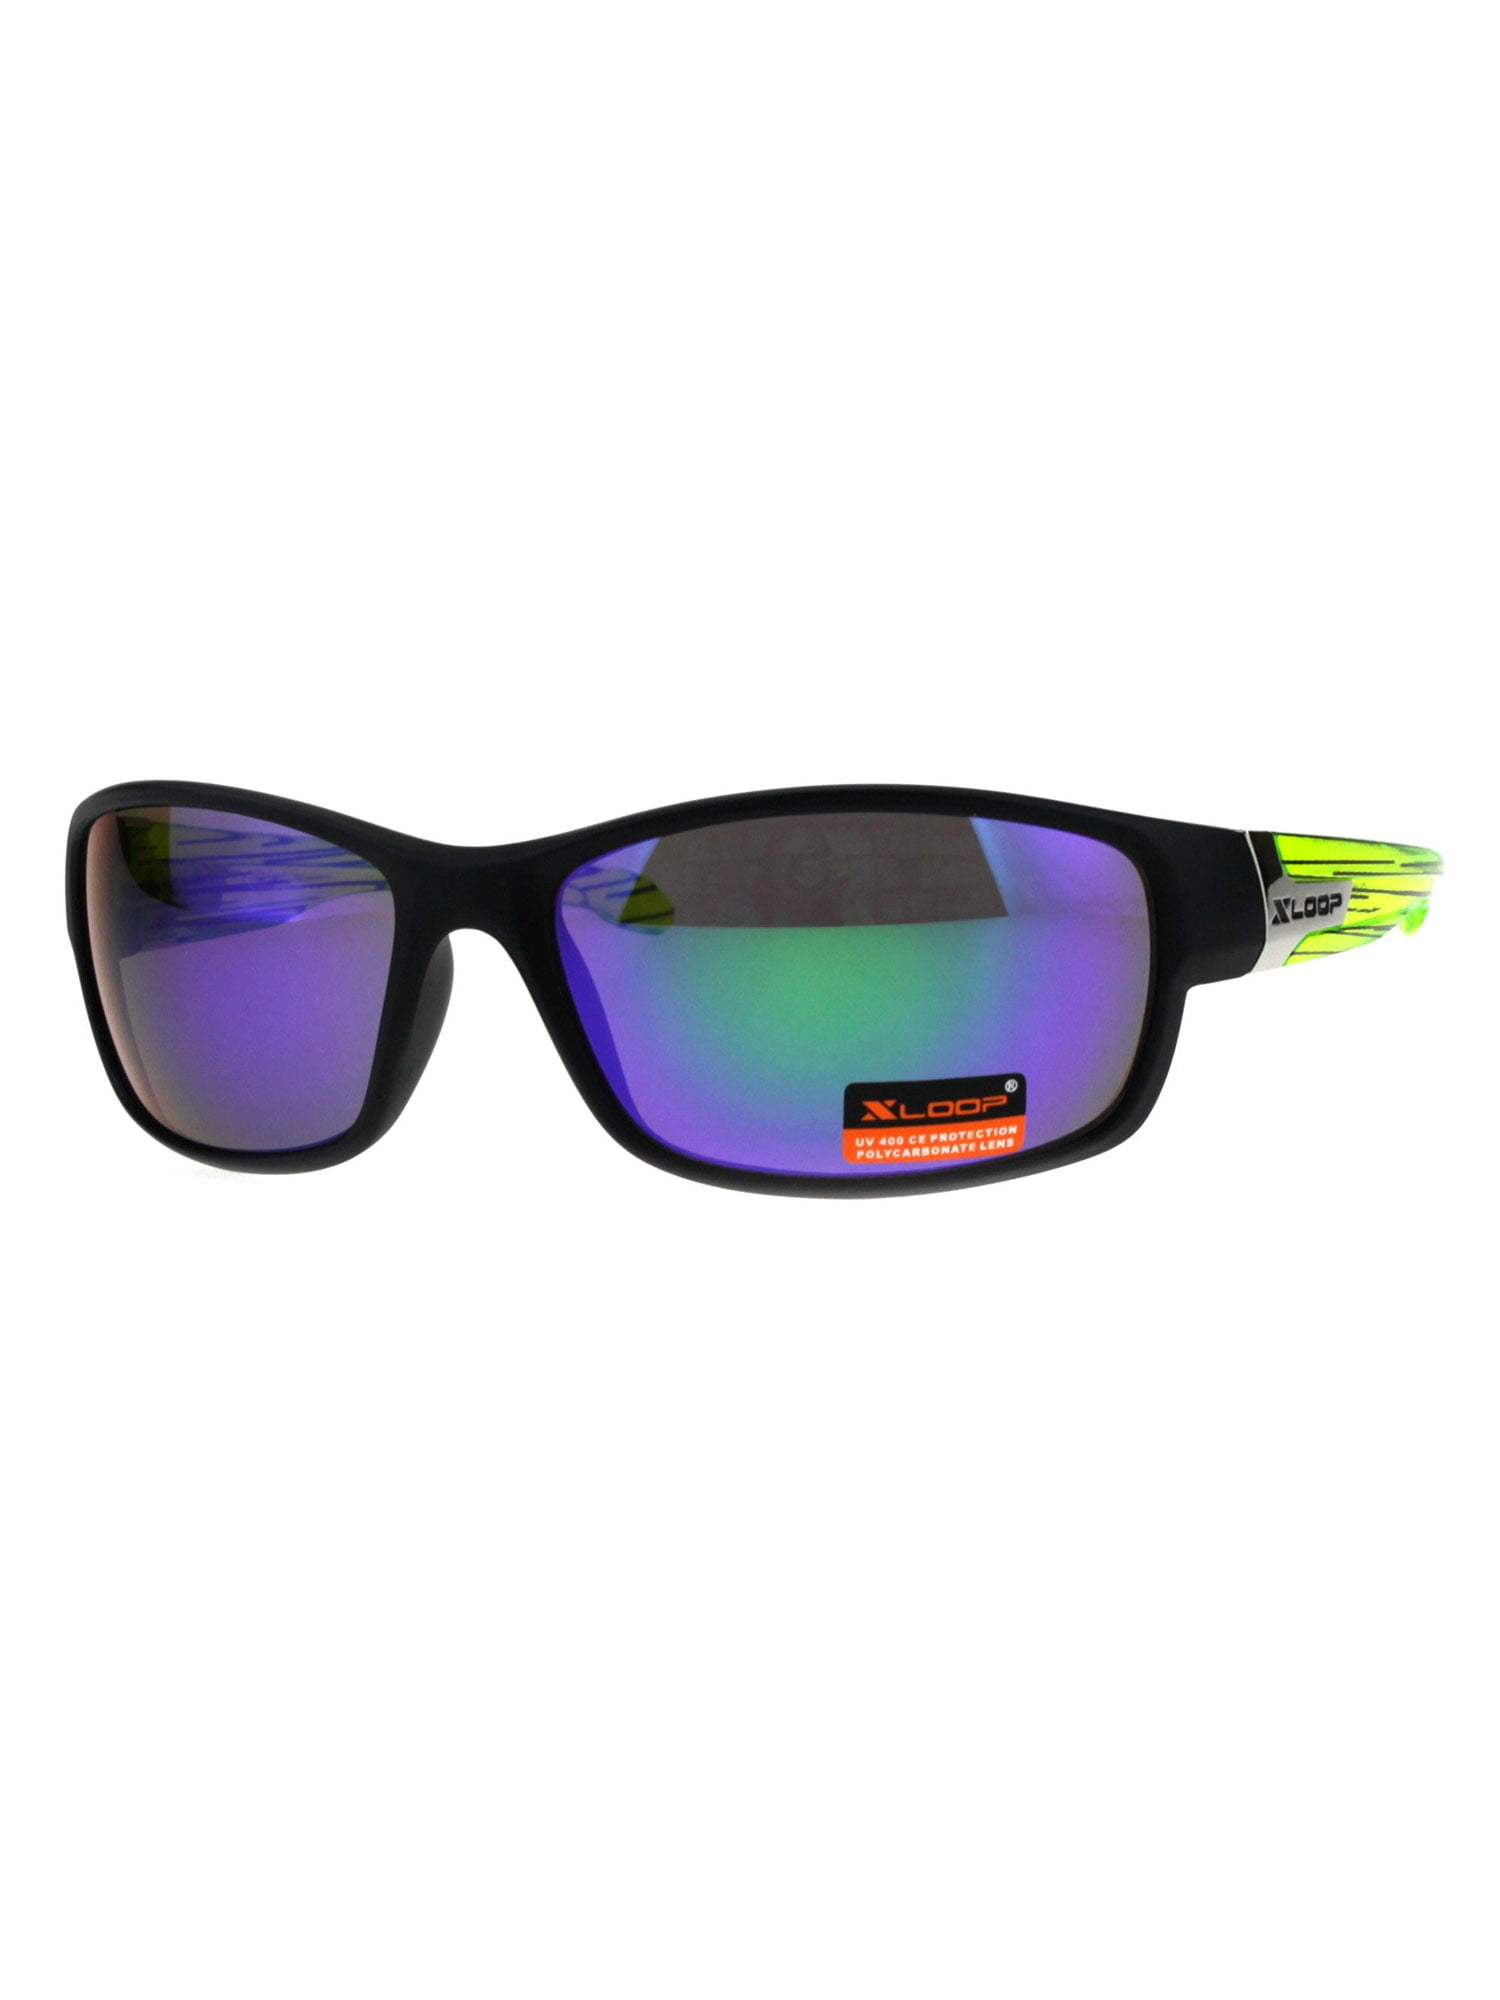 Xloop Mens Mirror Lens 90s Rectangular Warp Plastic Sport Sunglasses Green Black Blue 